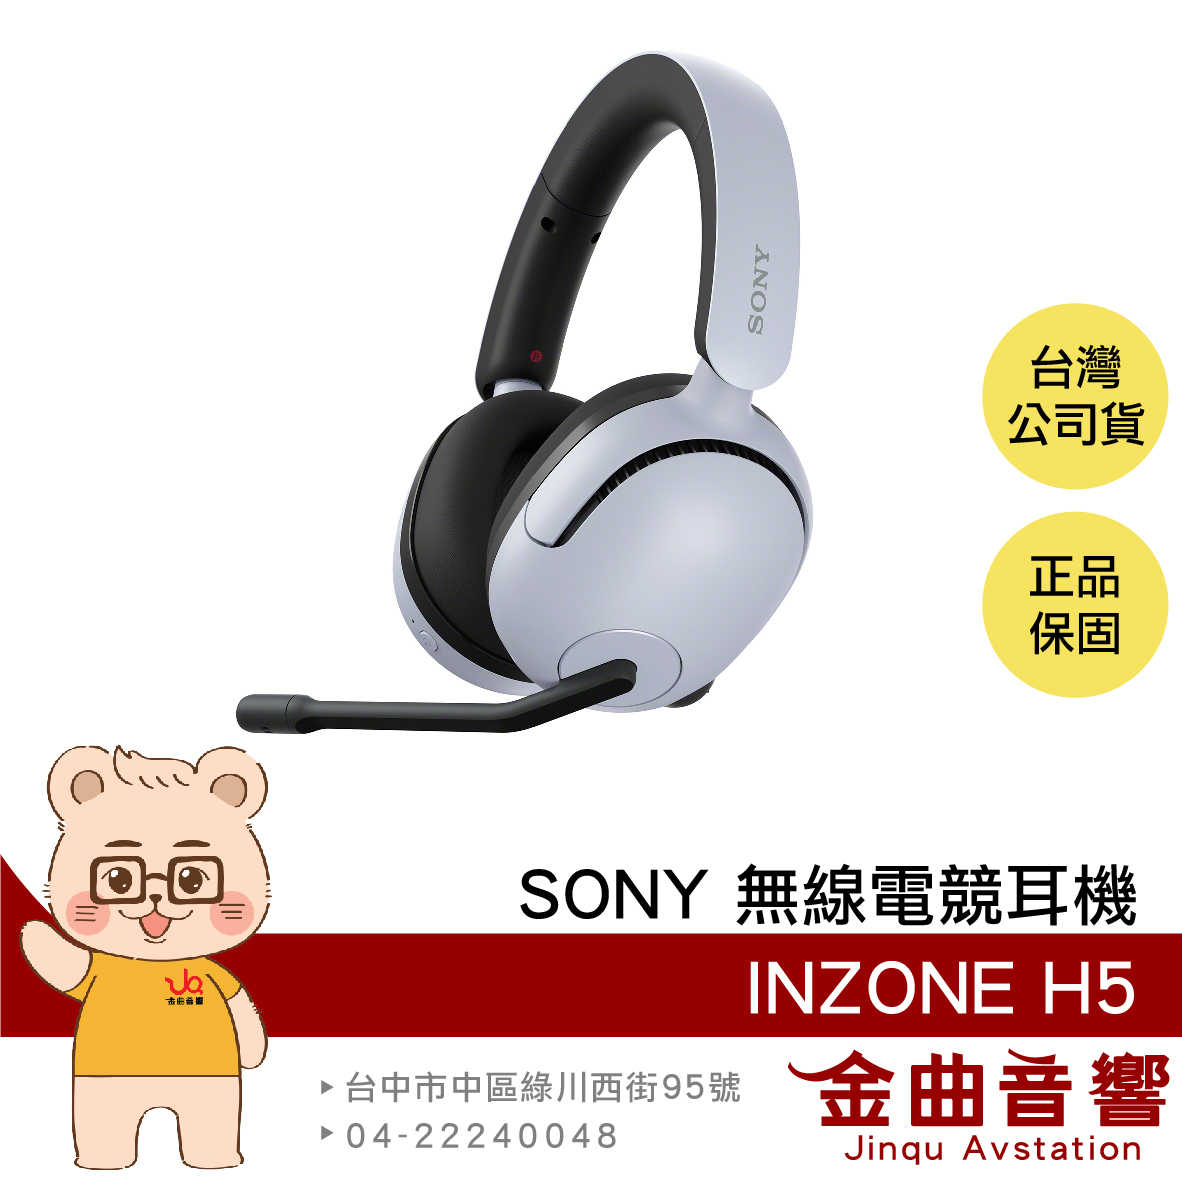 SONY WH-G500 白色 空間音效 有線無線雙用 INZONE H5 無線 電競 耳罩式耳機 | 金曲音響